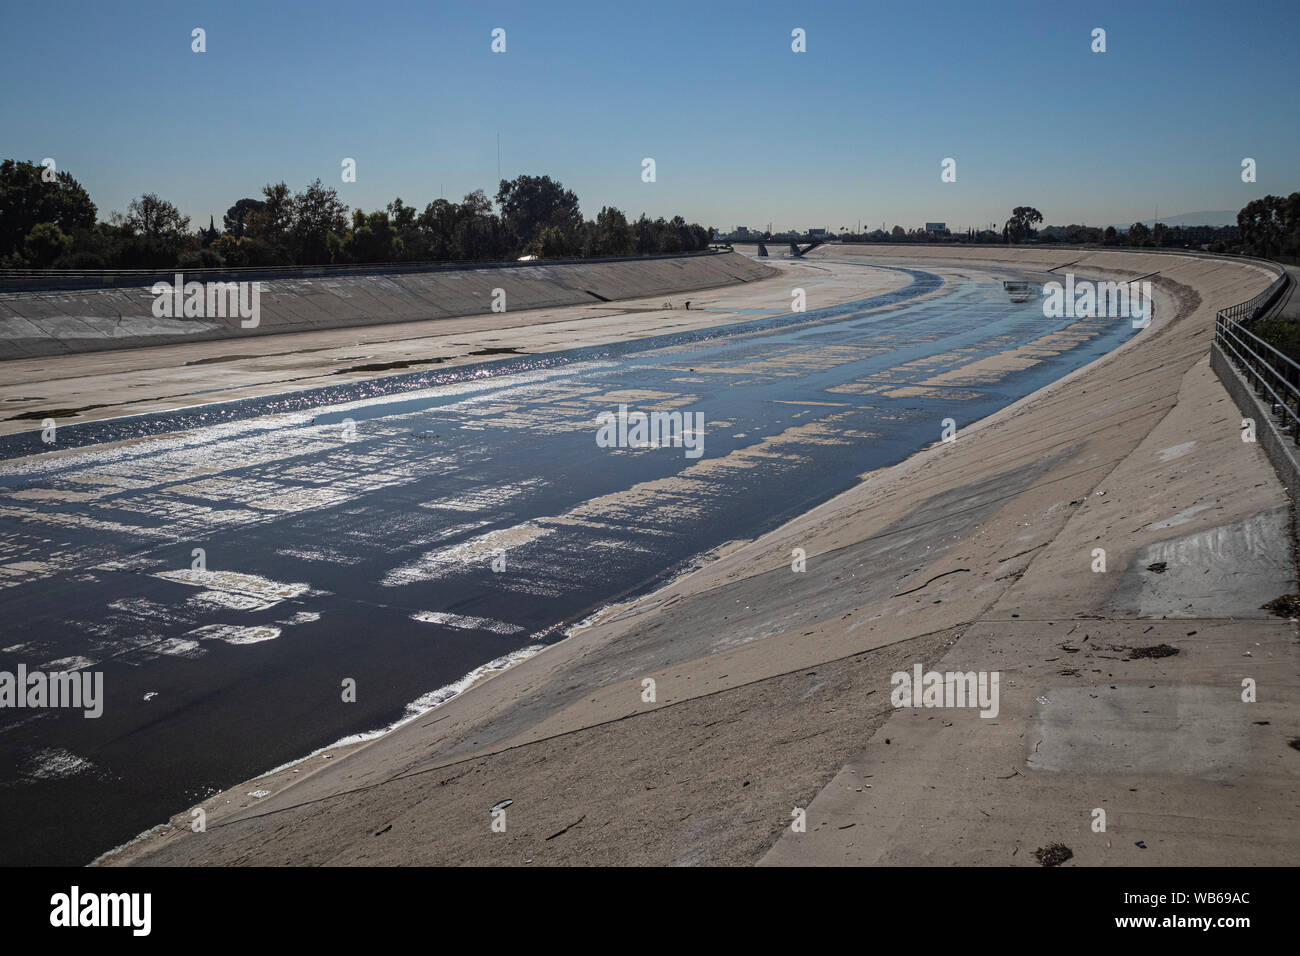 The Los Angeles River, City of Paramount, South LA, Califortnia, USA, Stock Photo